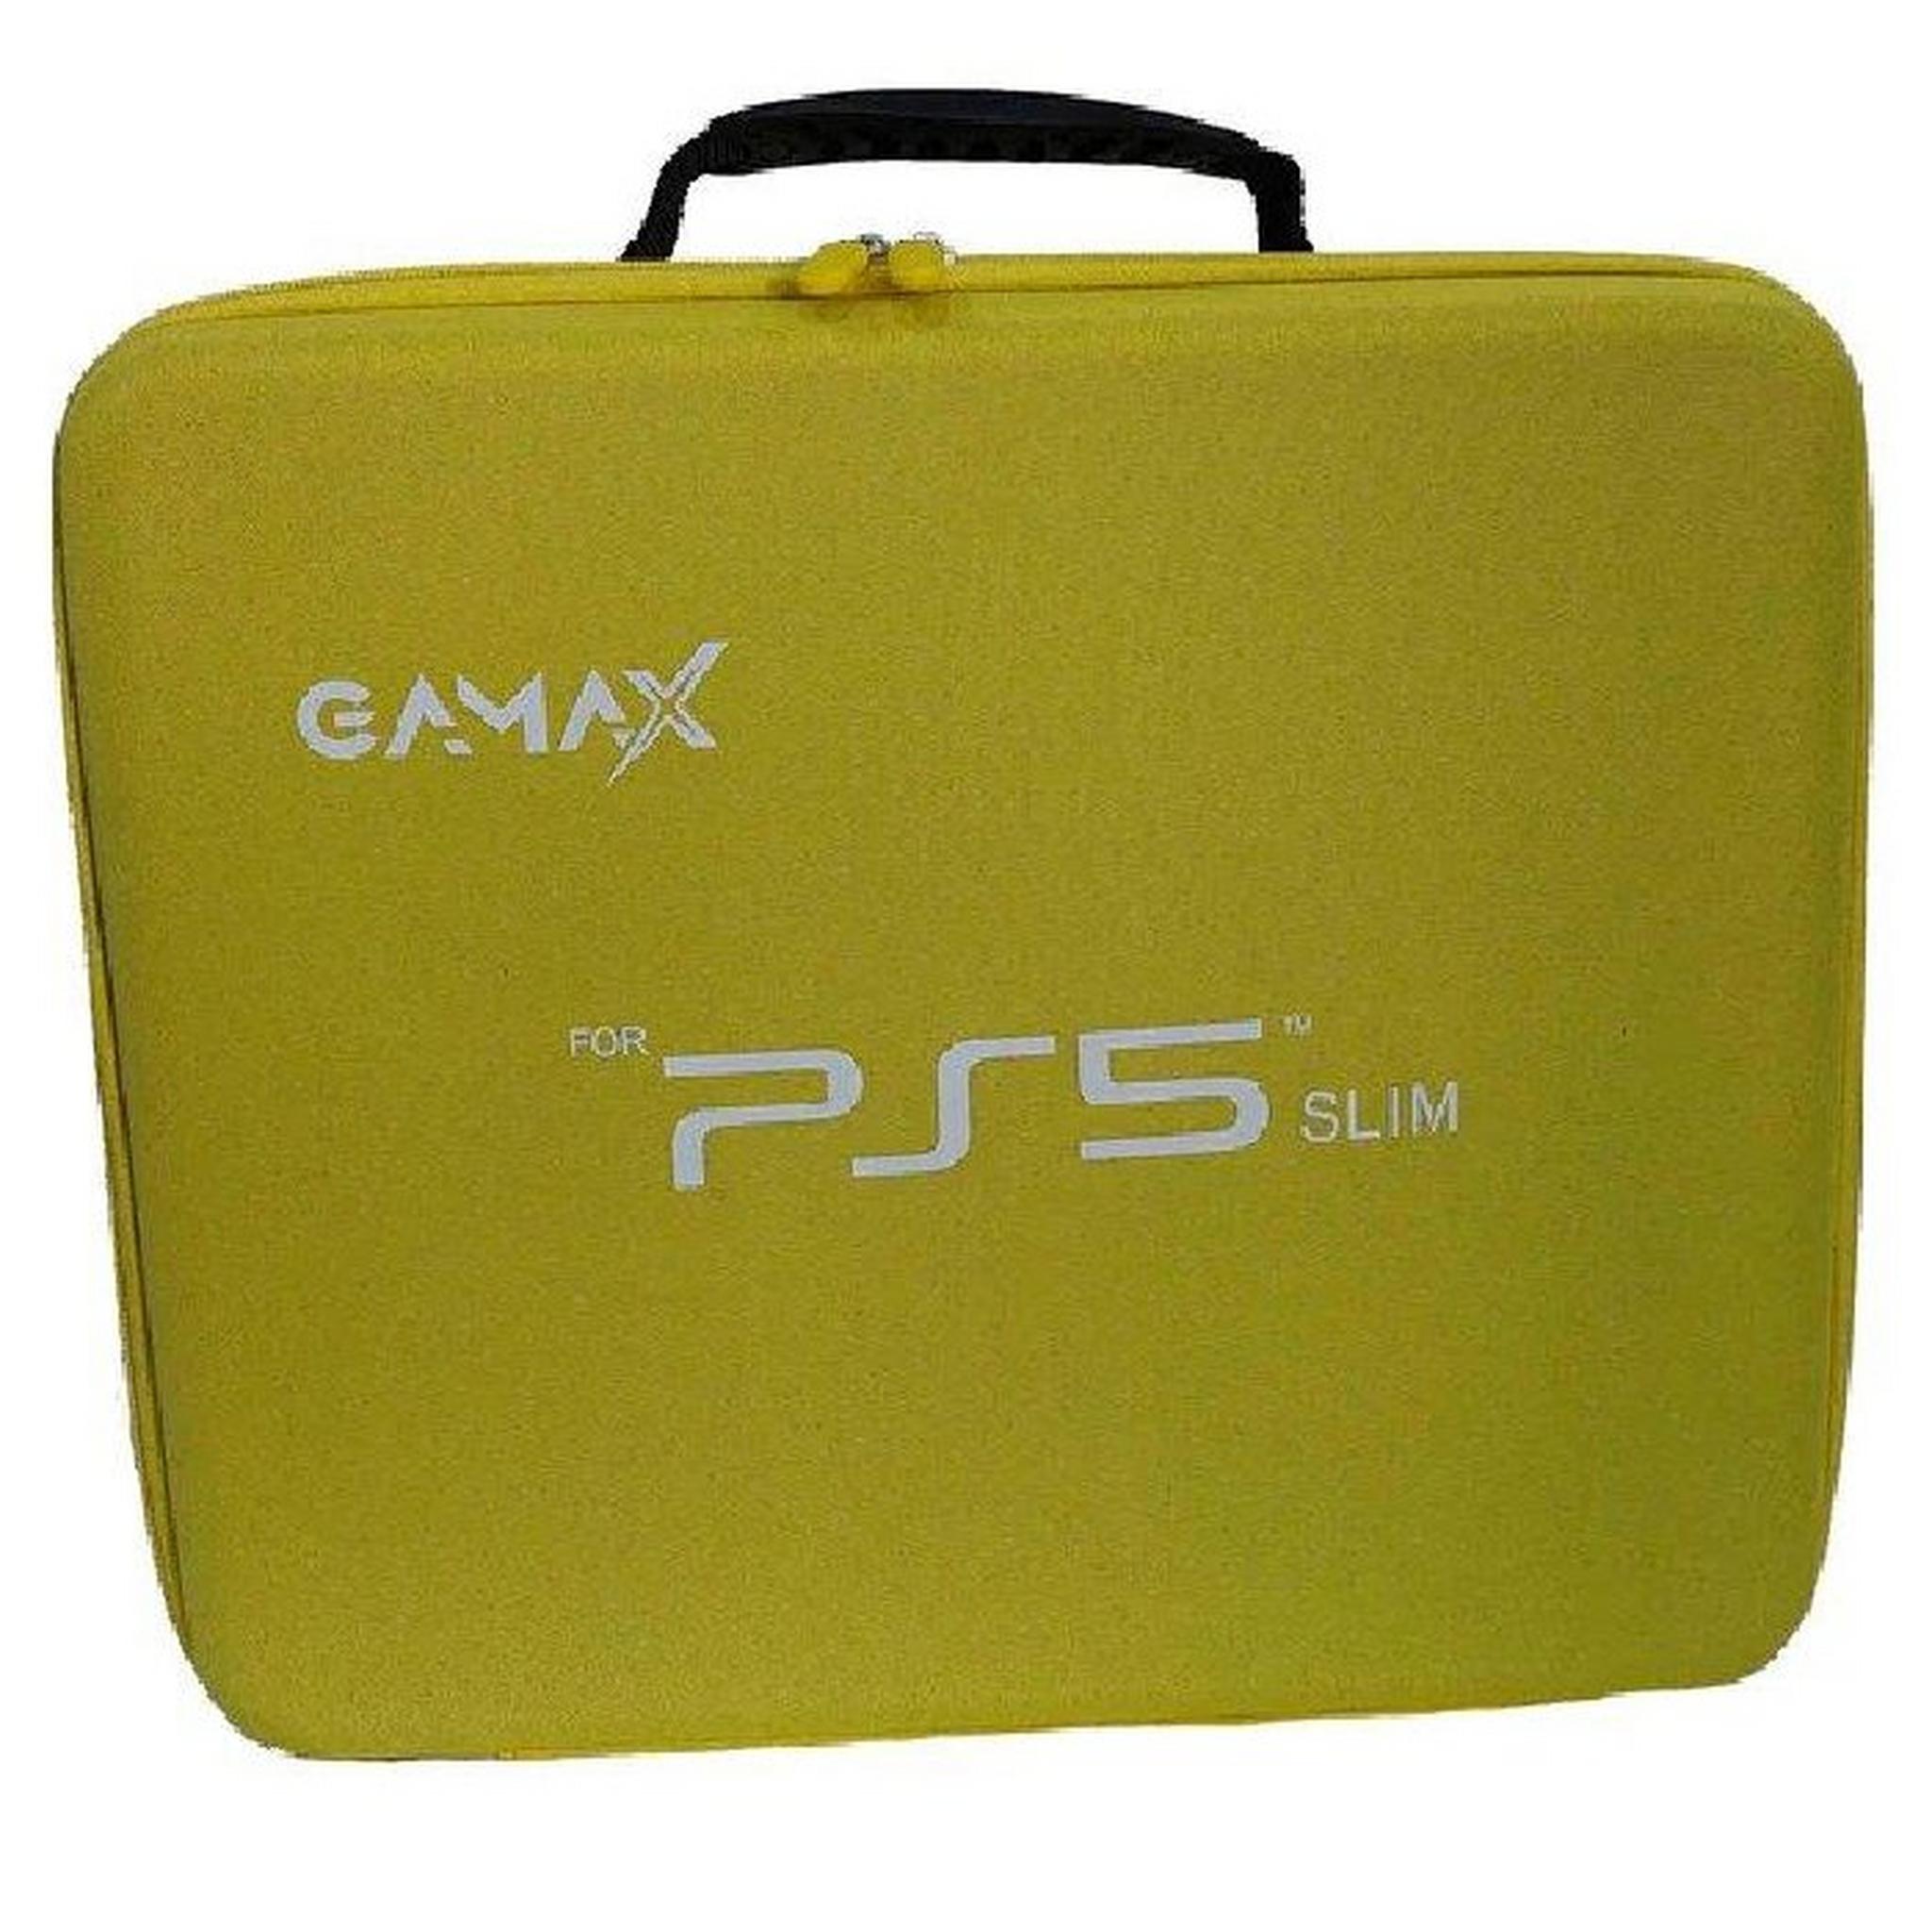 Gamax Storage Bag for PlayStation 5 Slim, STRG-BG-PS5-SLM-YW - Yellow